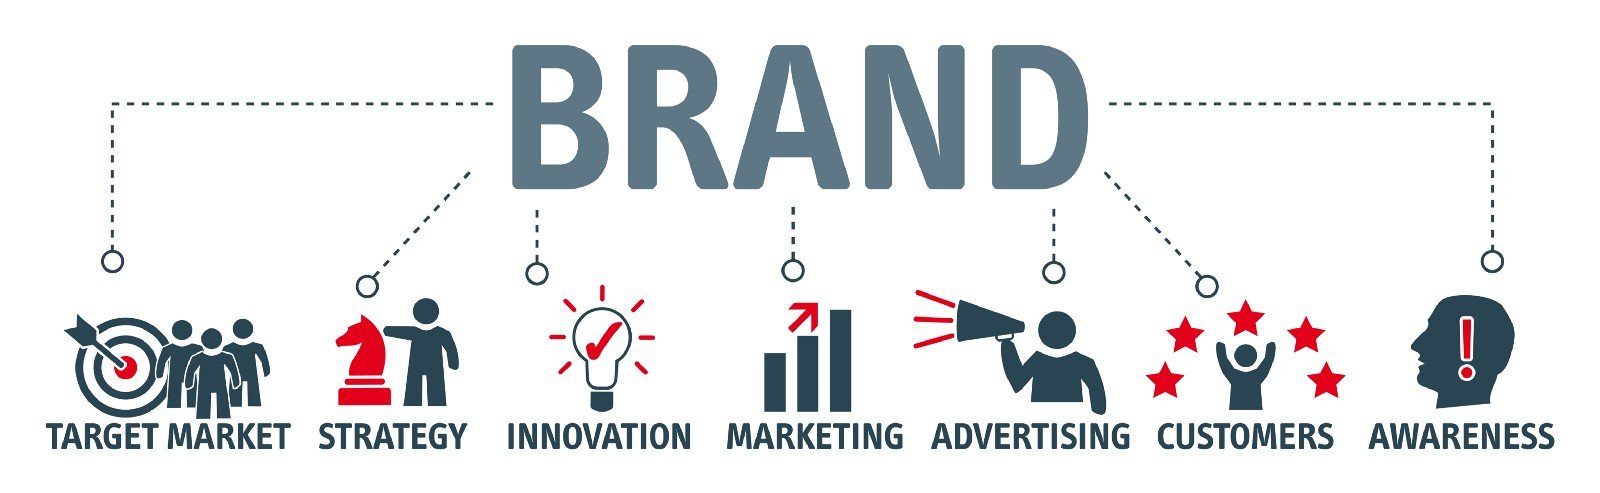 Digital Branding Agency